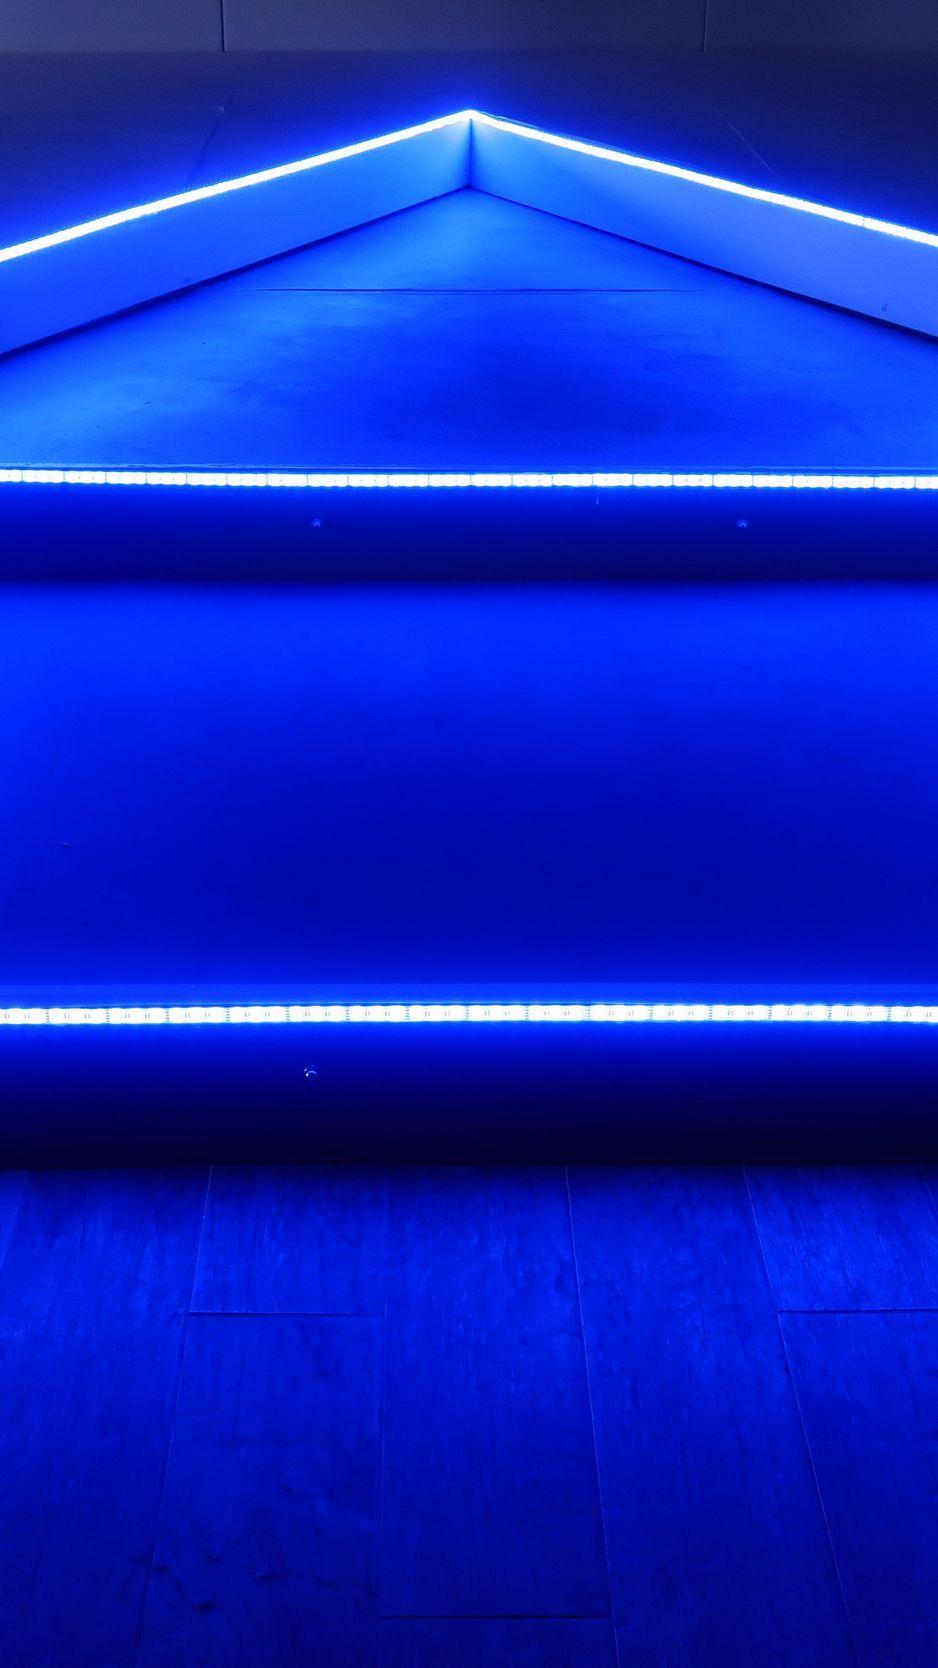 Blue Neon Light iPhone Wallpaper - iPhone Wallpapers